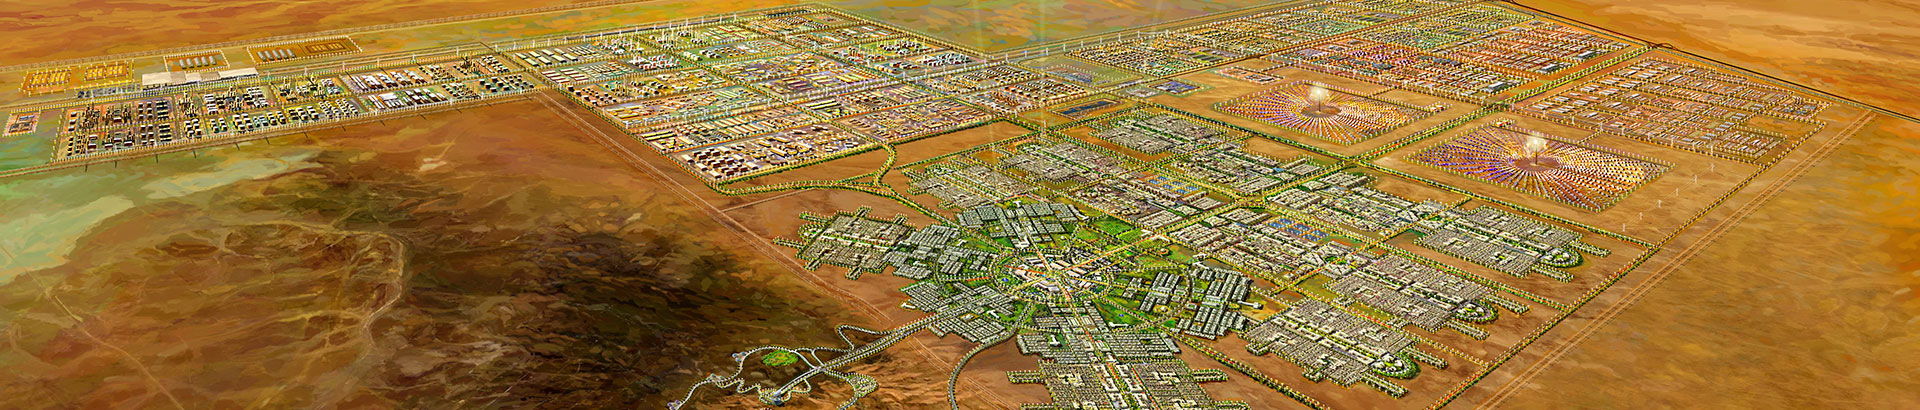 Wa'ad Al Shamaal urban planning aerial view